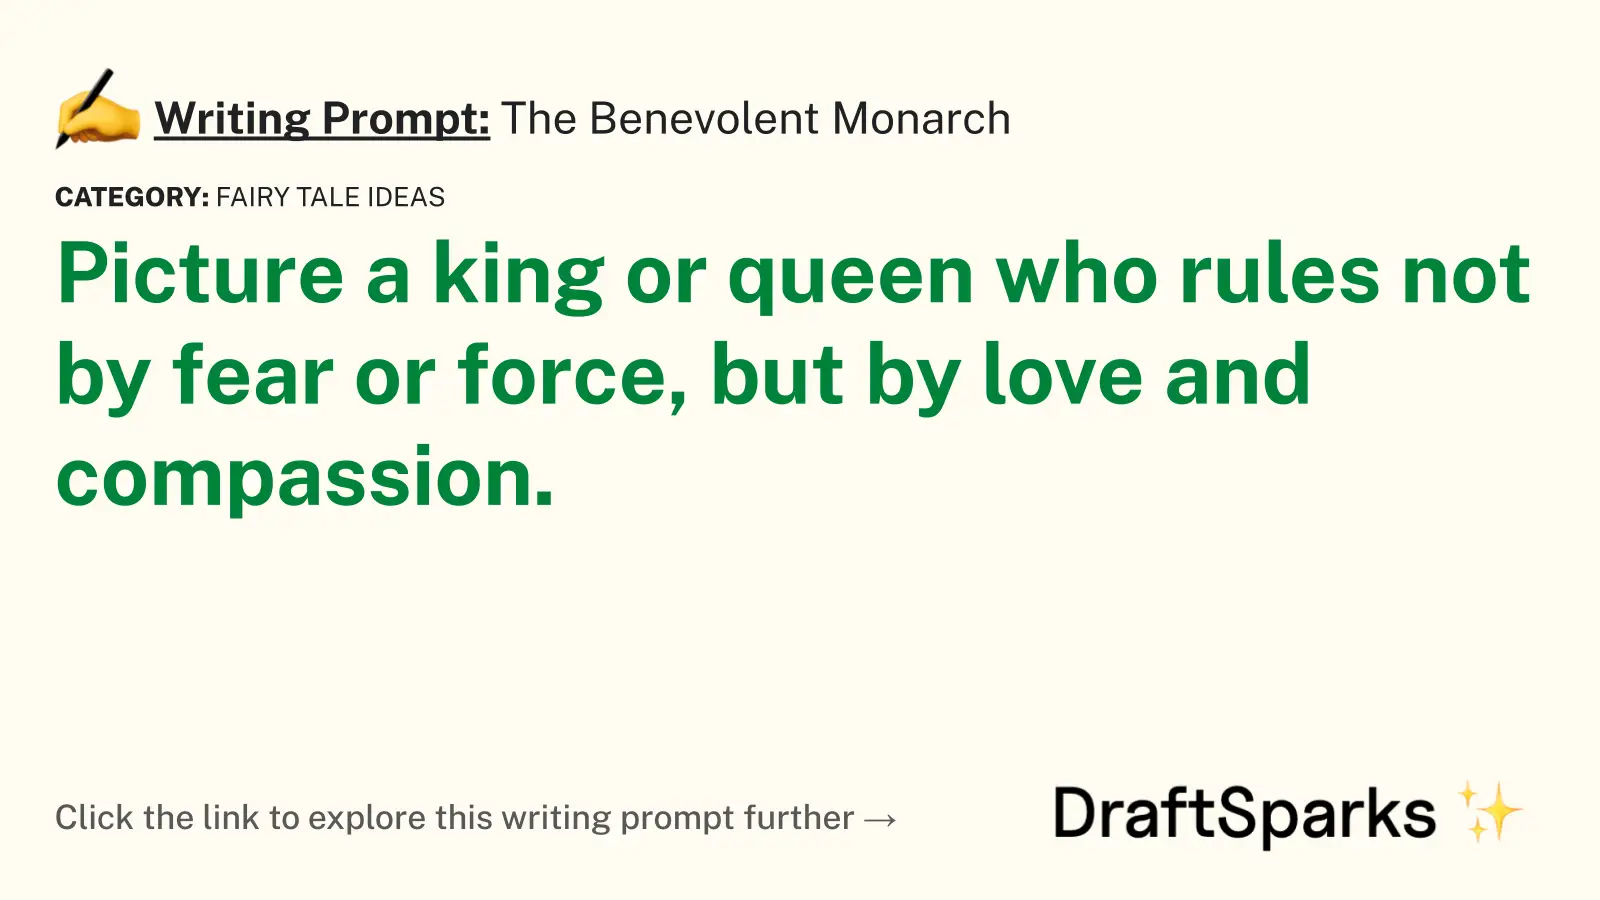 The Benevolent Monarch